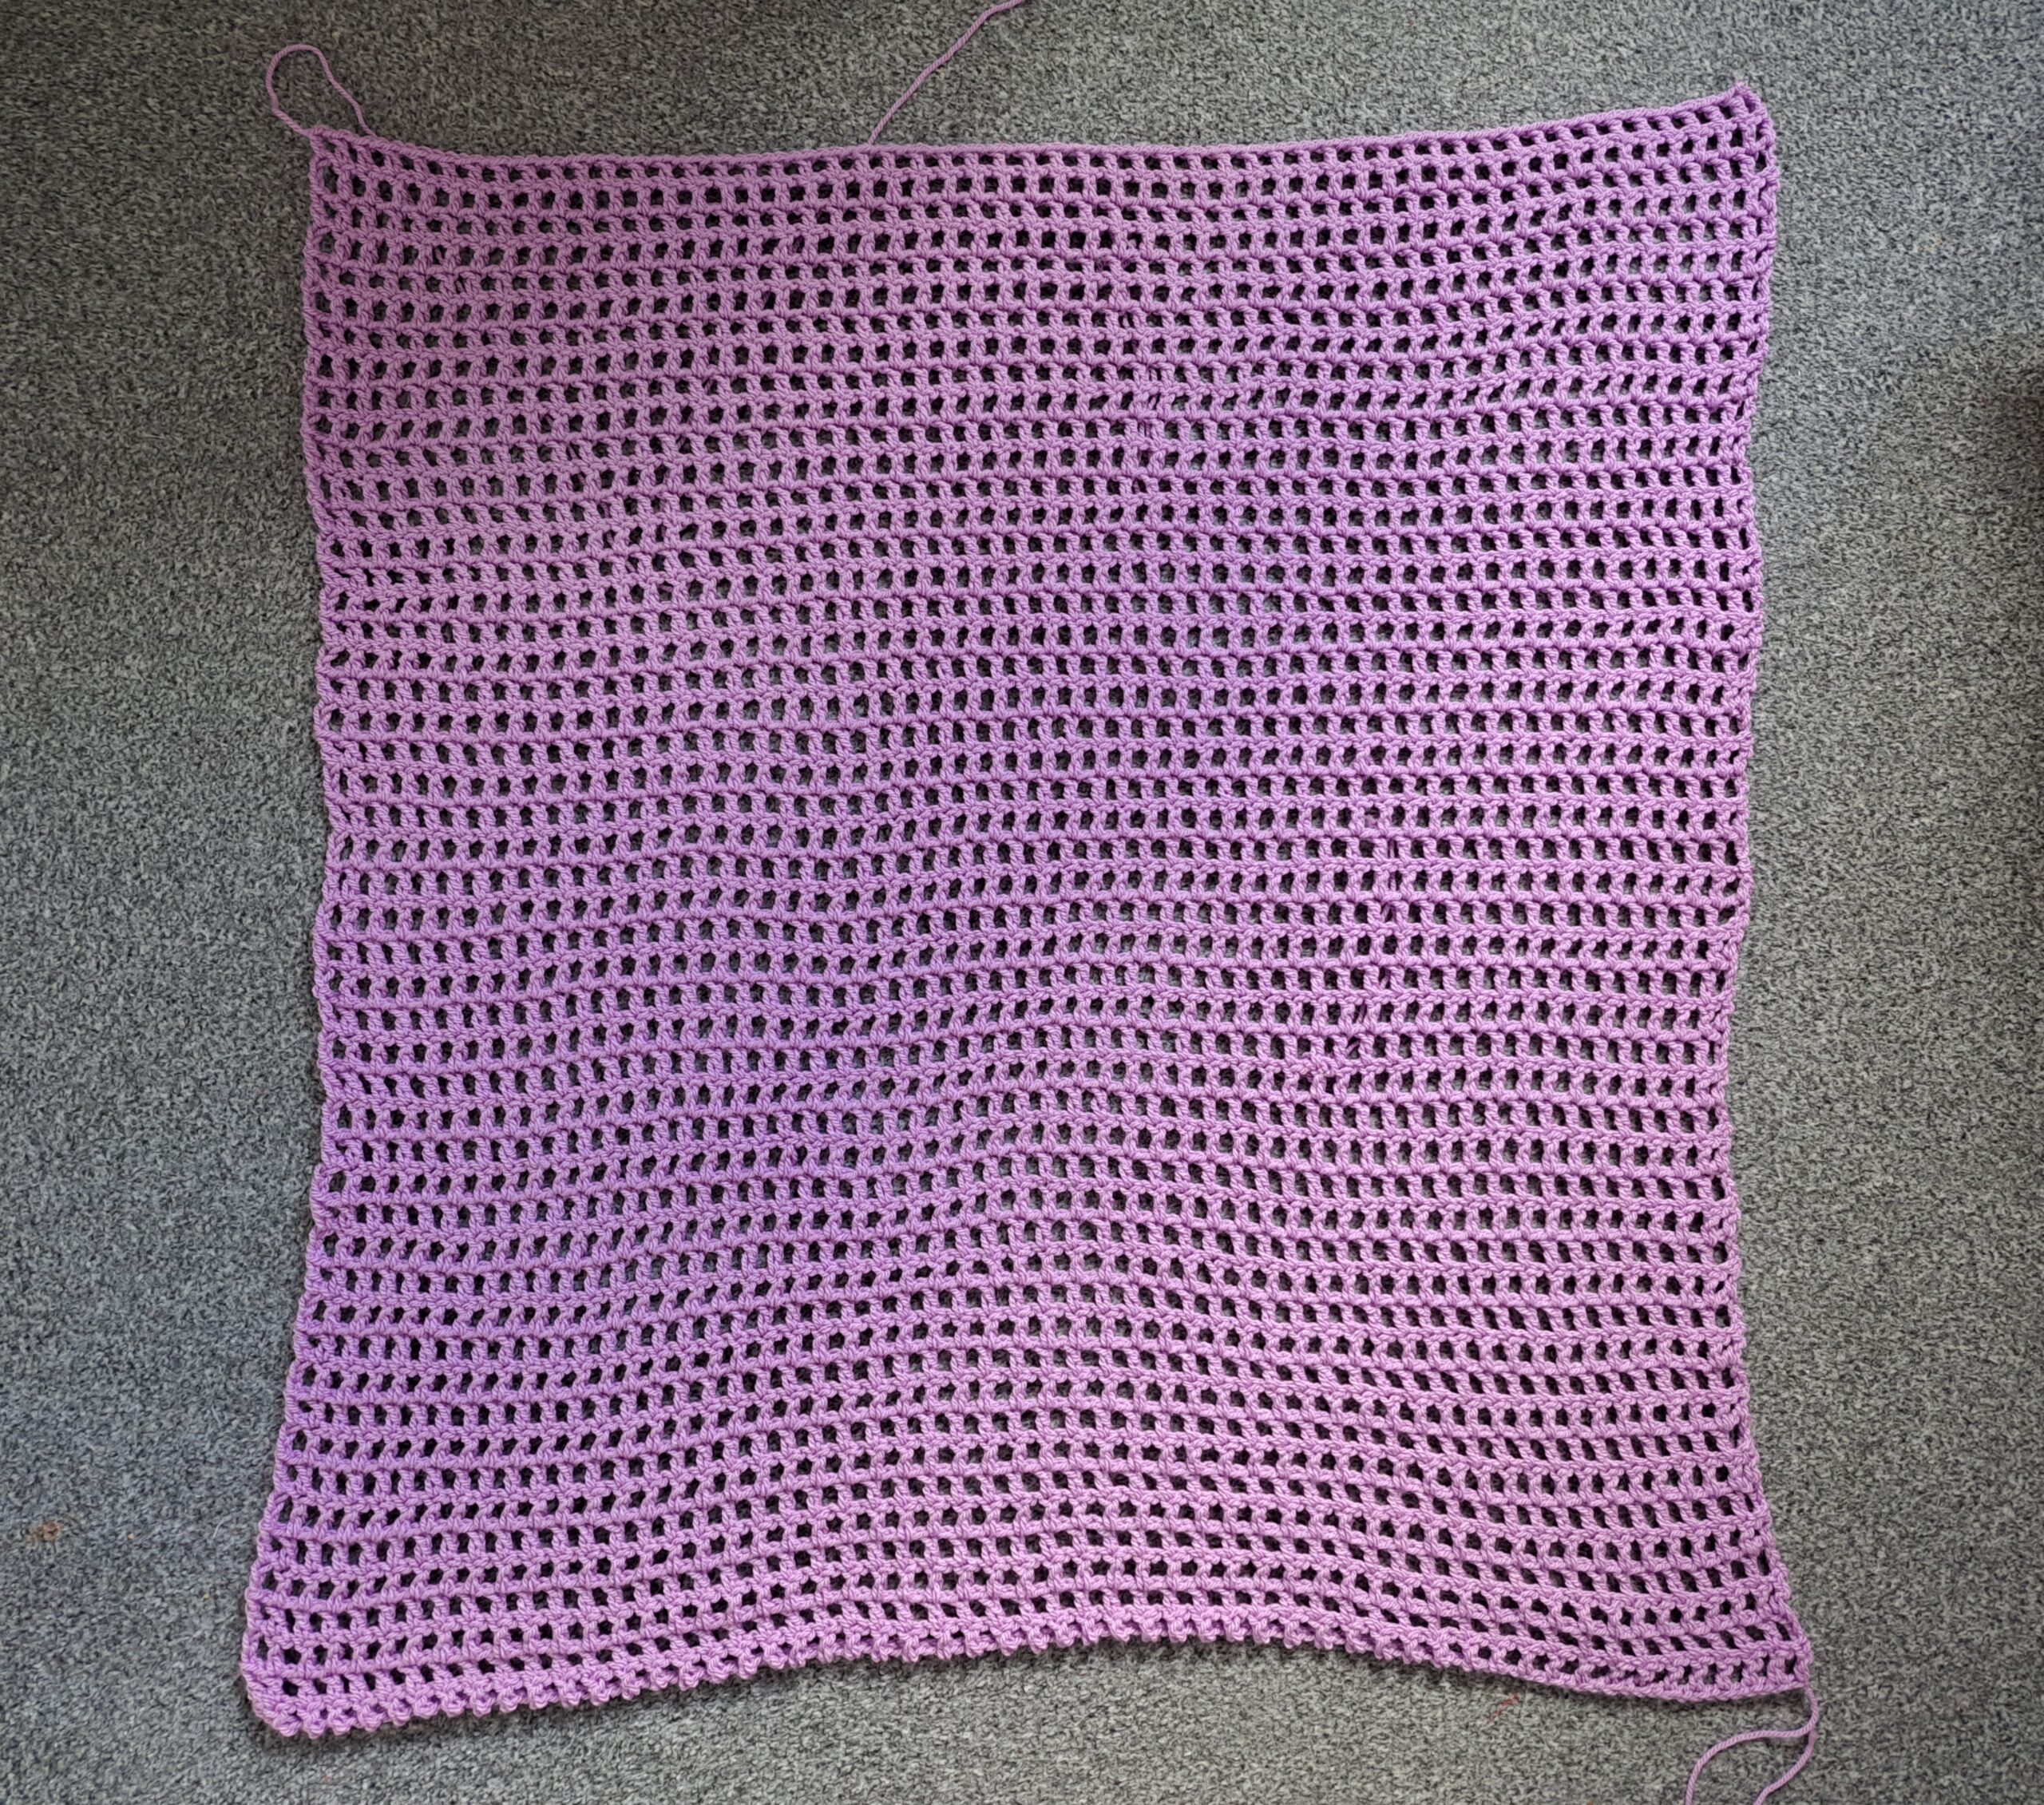 Crochet Lavender Cocoon Cardigan Free Pattern